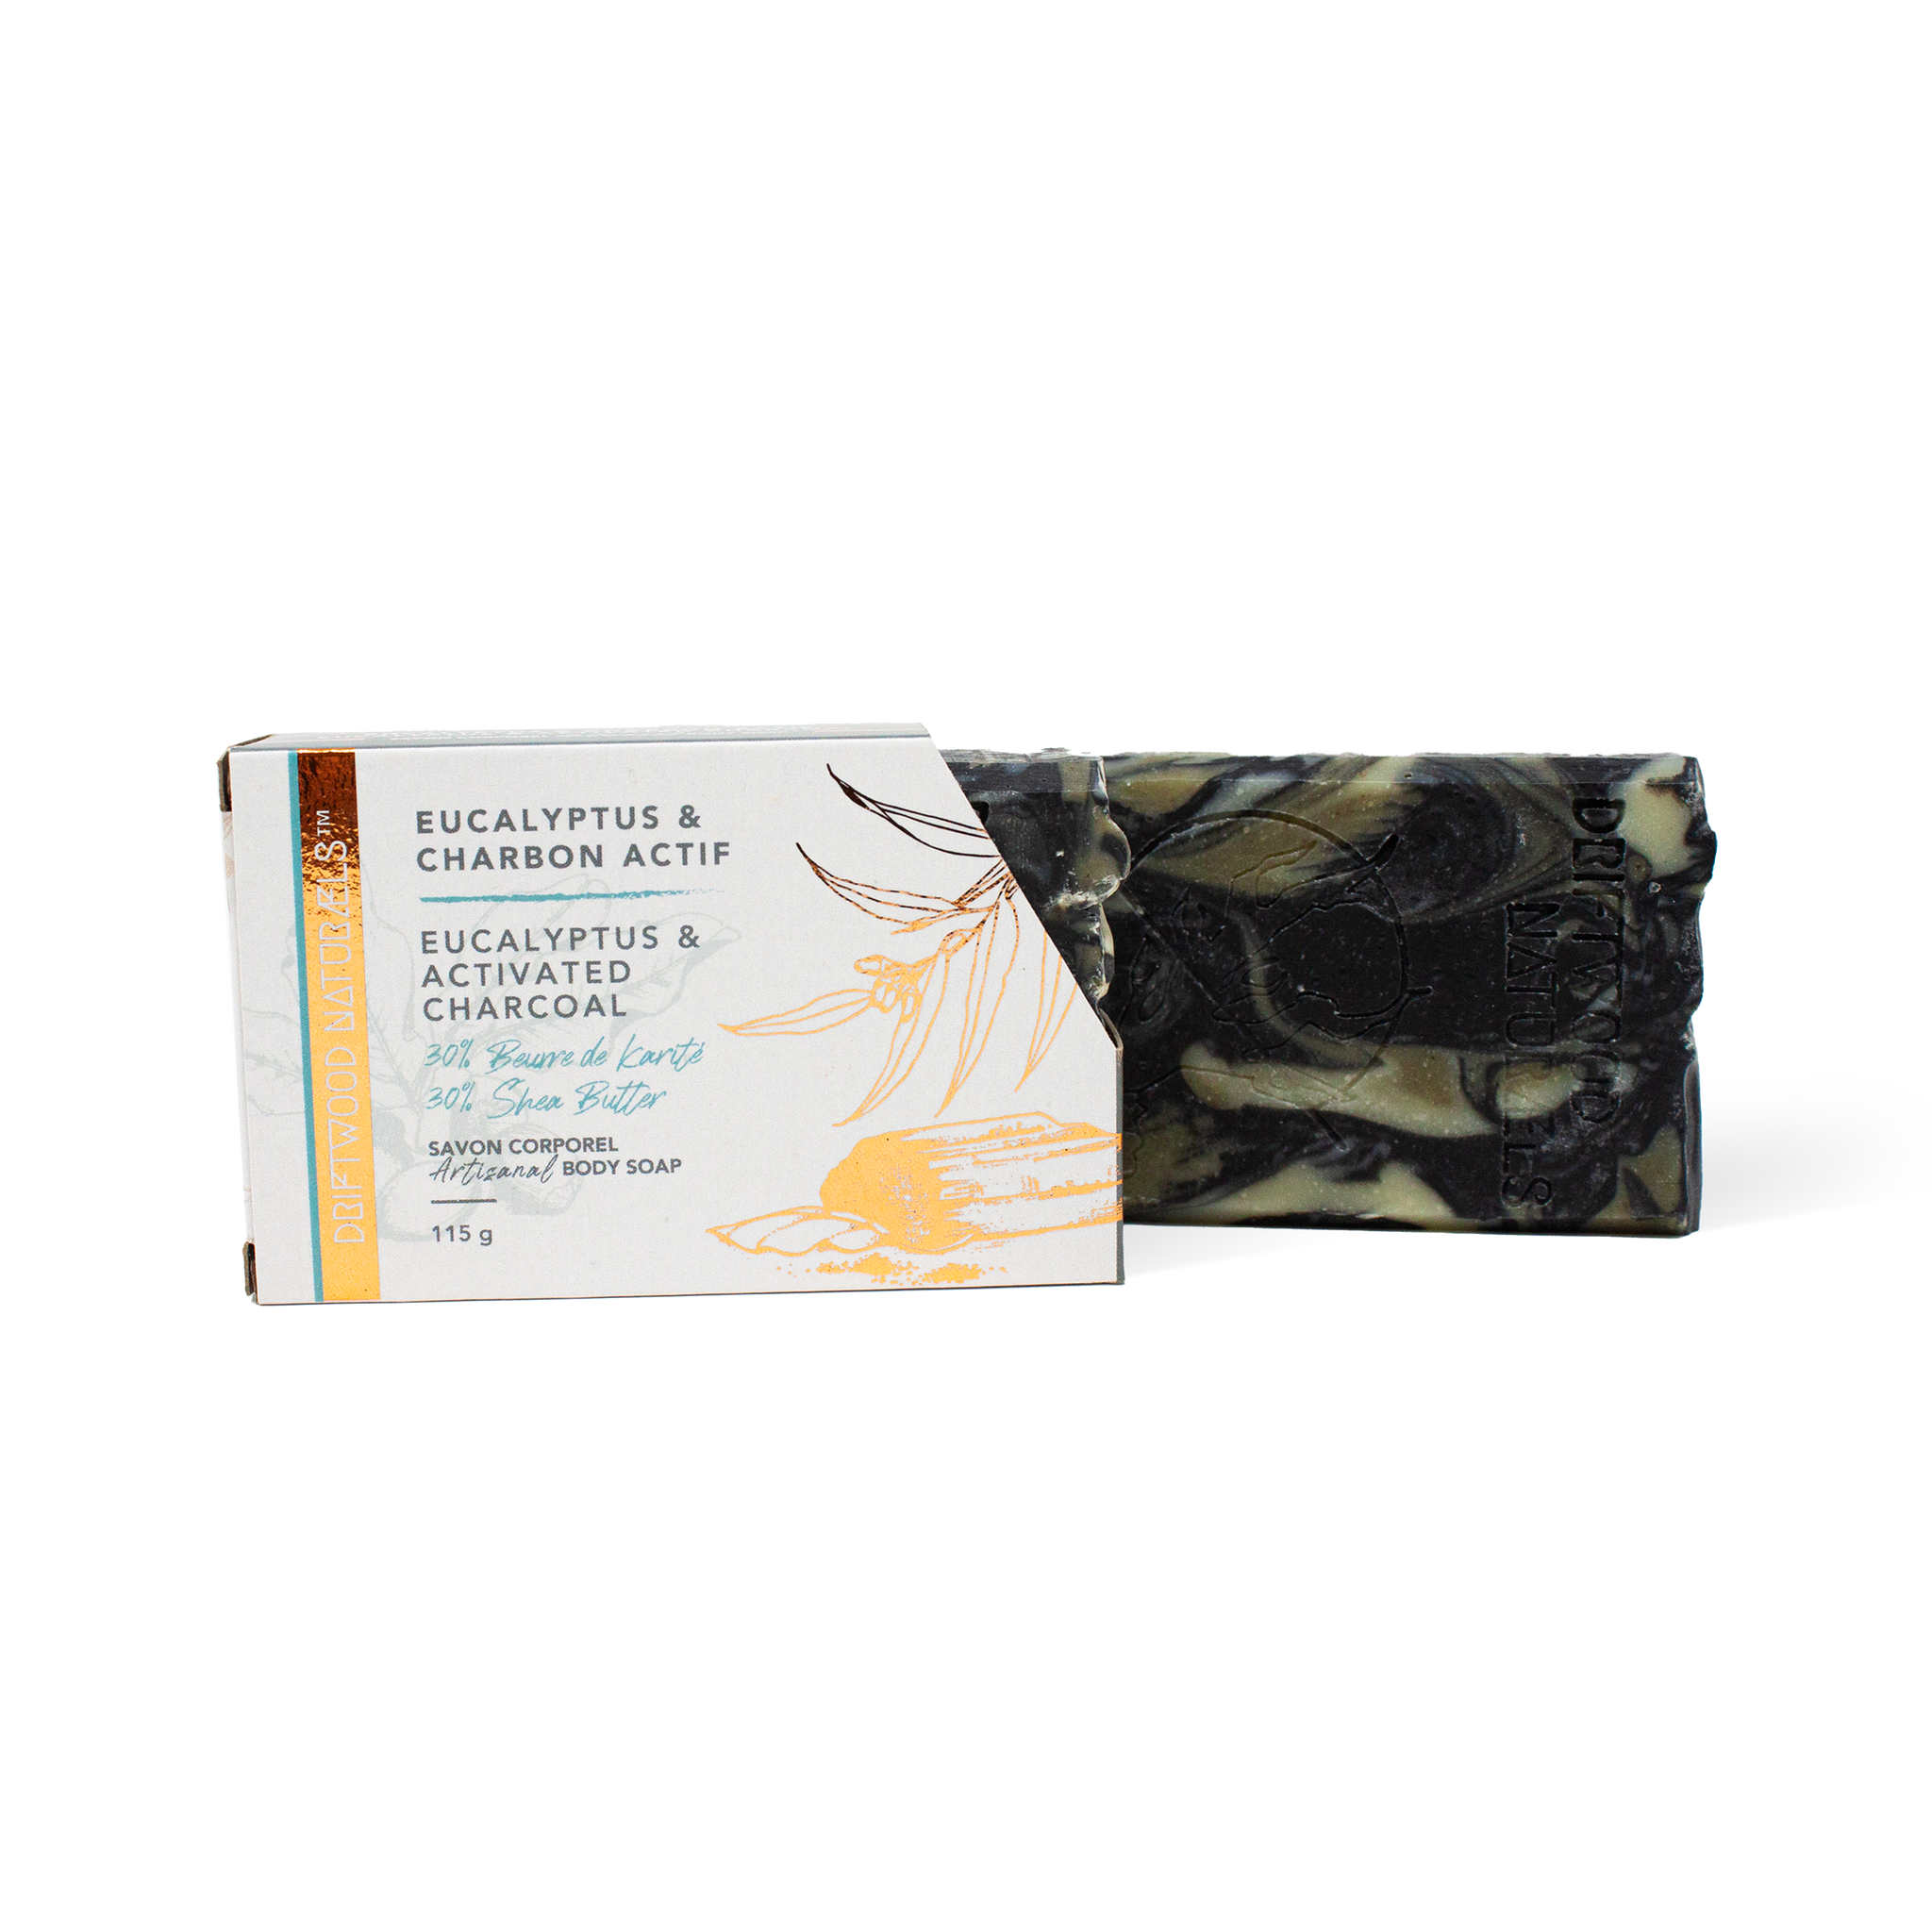 Eucalyptus & Activated Charcoal — Artisanal Body Soap